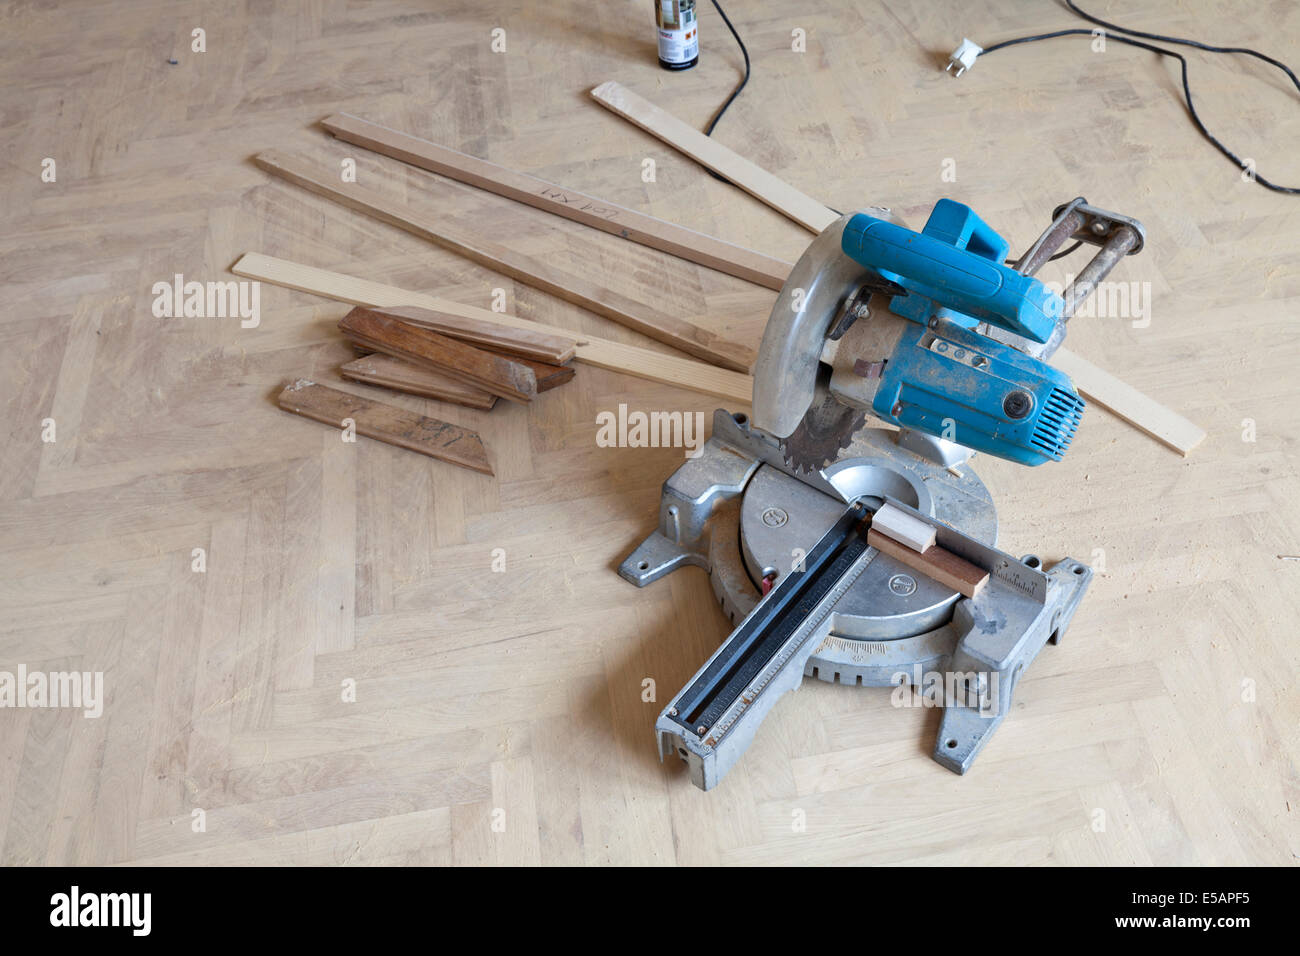 circular saw for cutting wood moldings Stock Photo